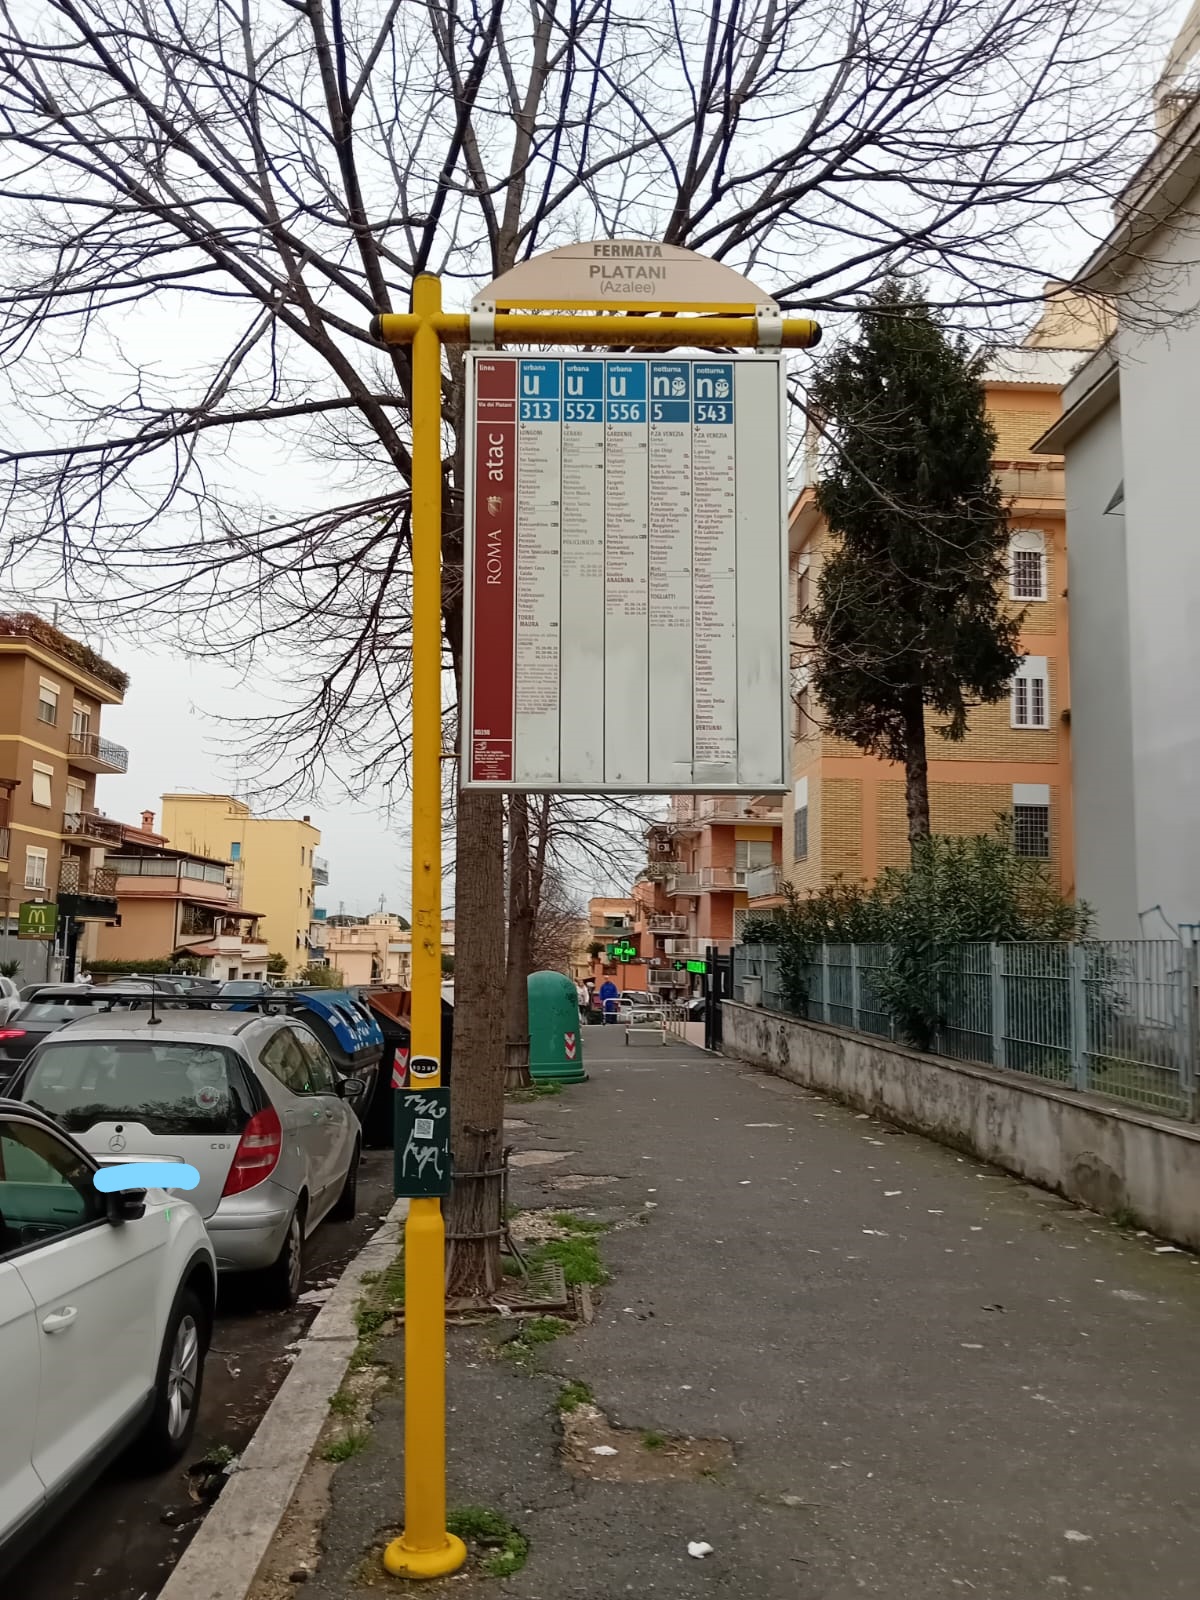 A Roma Italia dei Diritti segnala fermate bus fantasma 